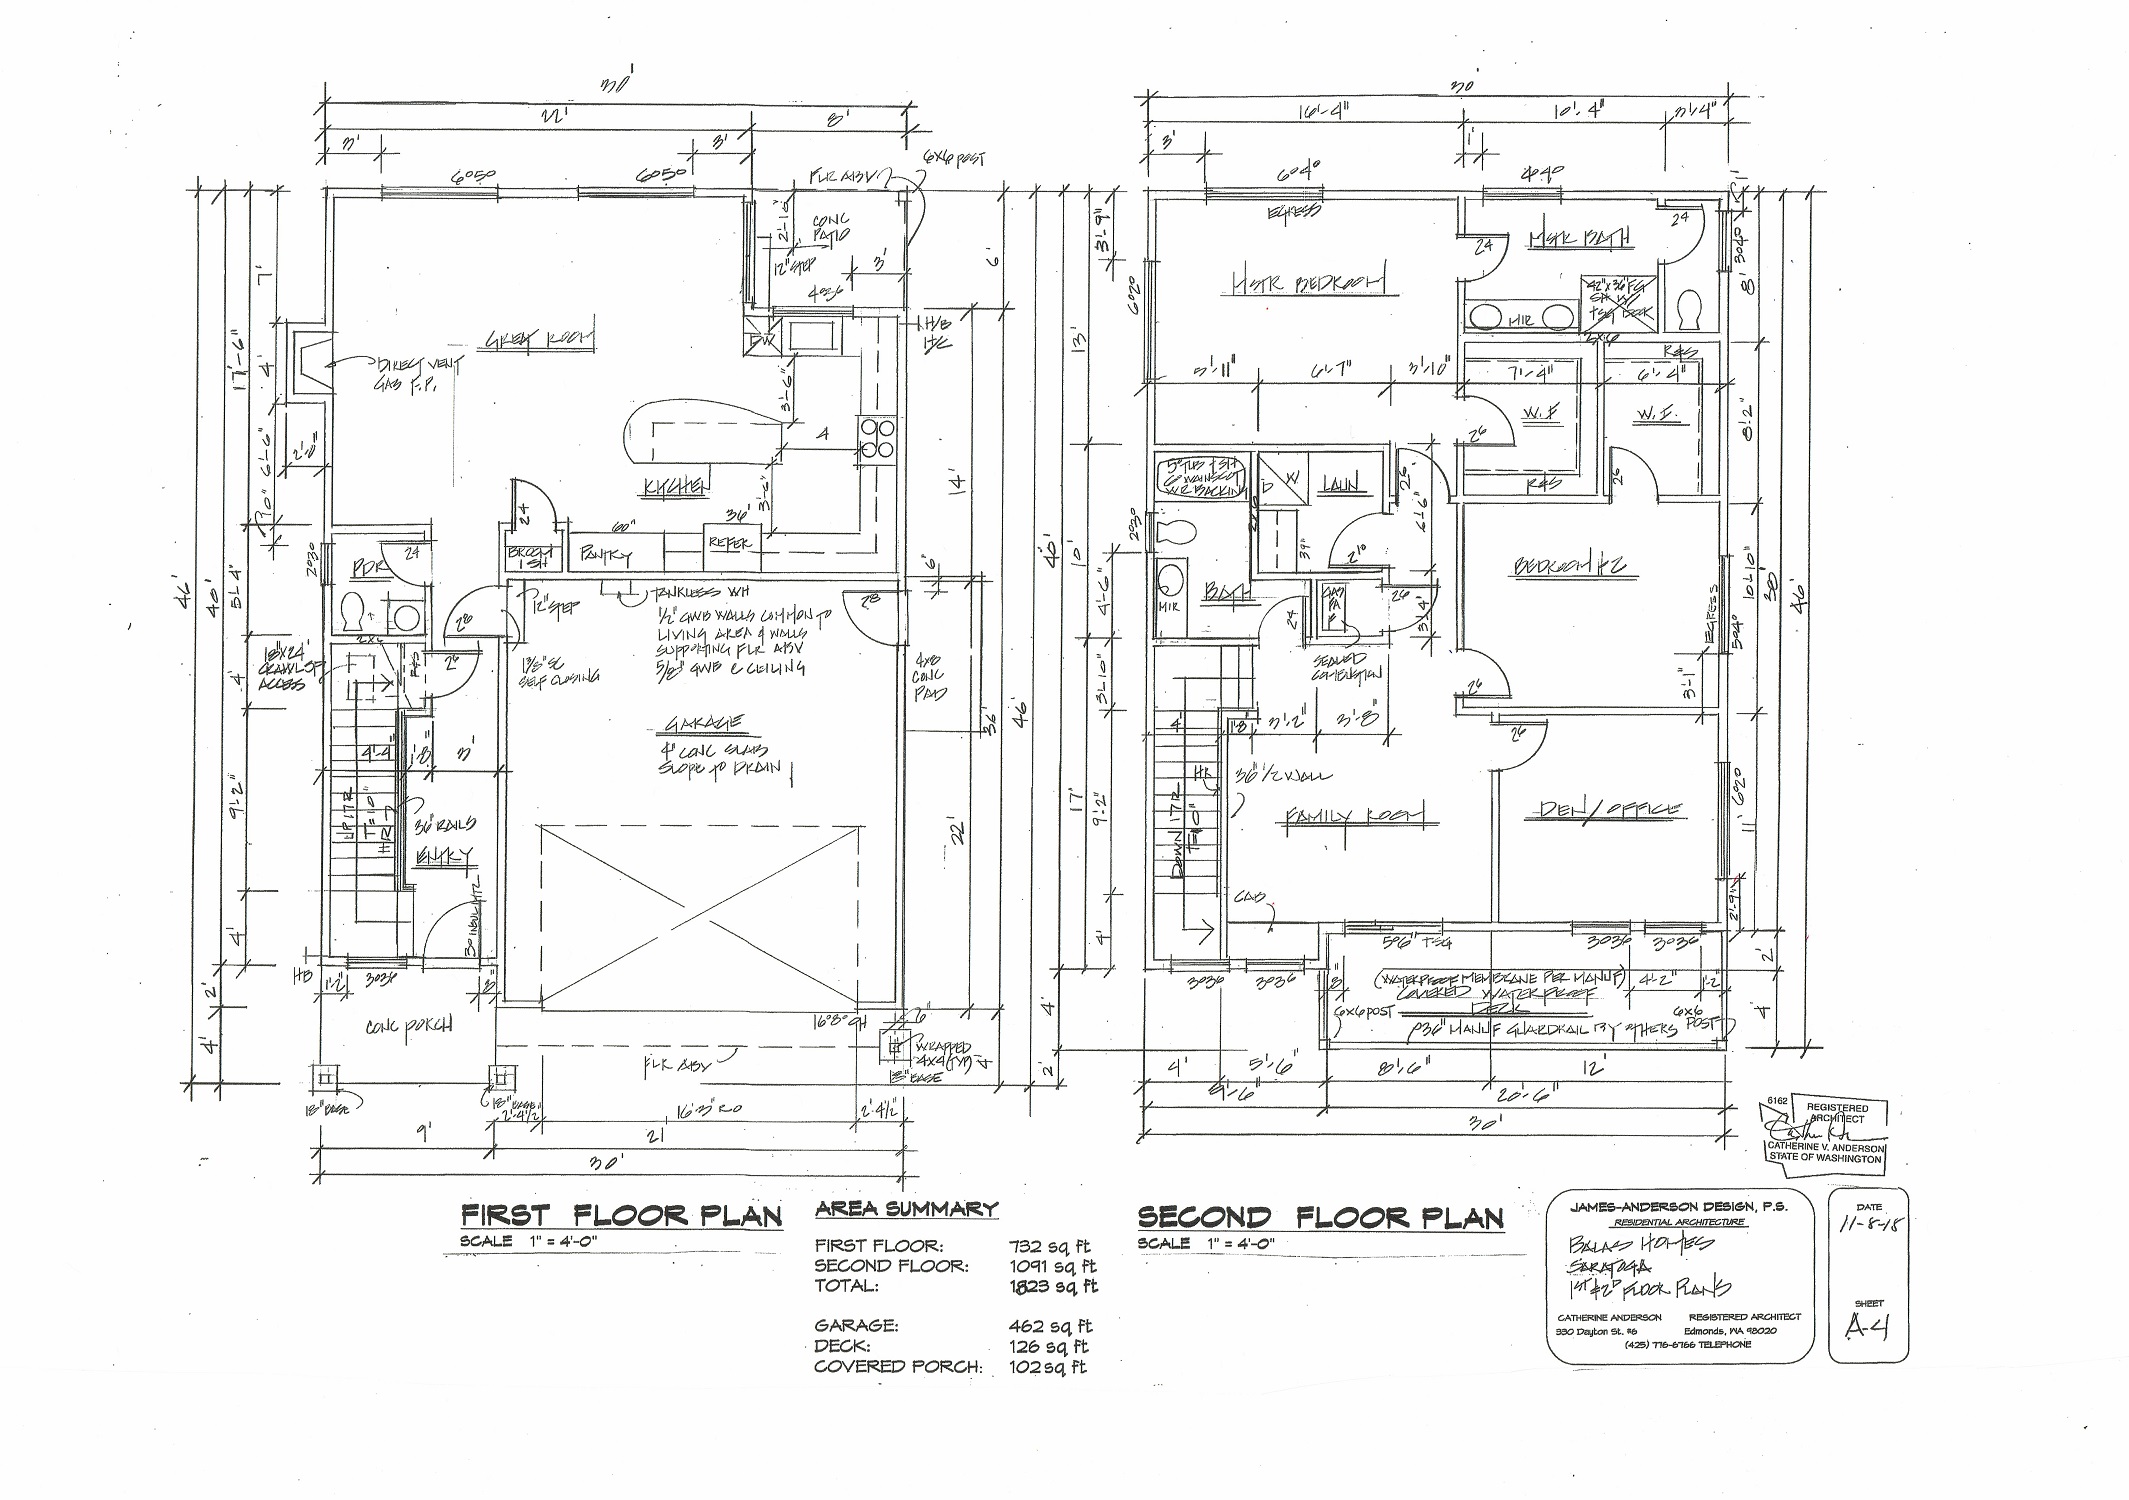 Saratoga floor plan JPG_000002 - Copy.jpg